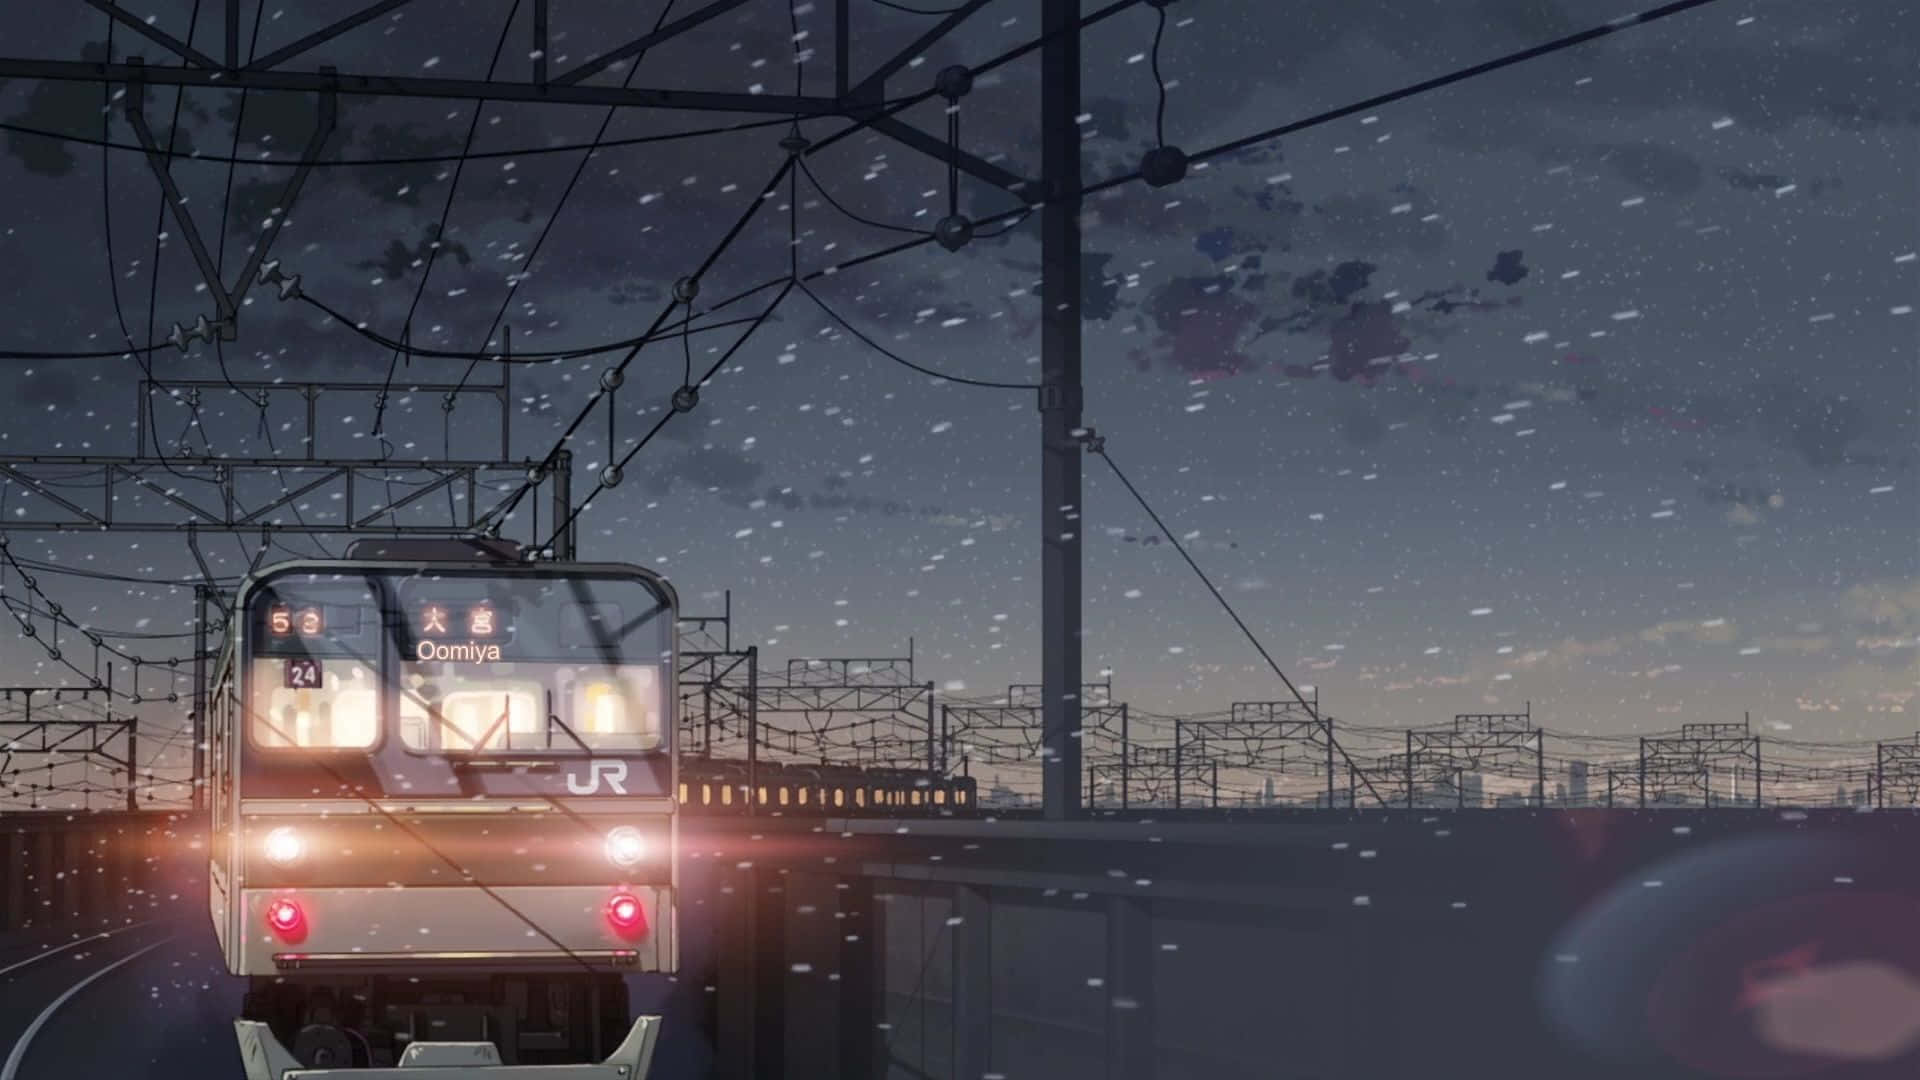 Unaimagen Creativa De Makoto Shinkai, El Inspirador Animador.